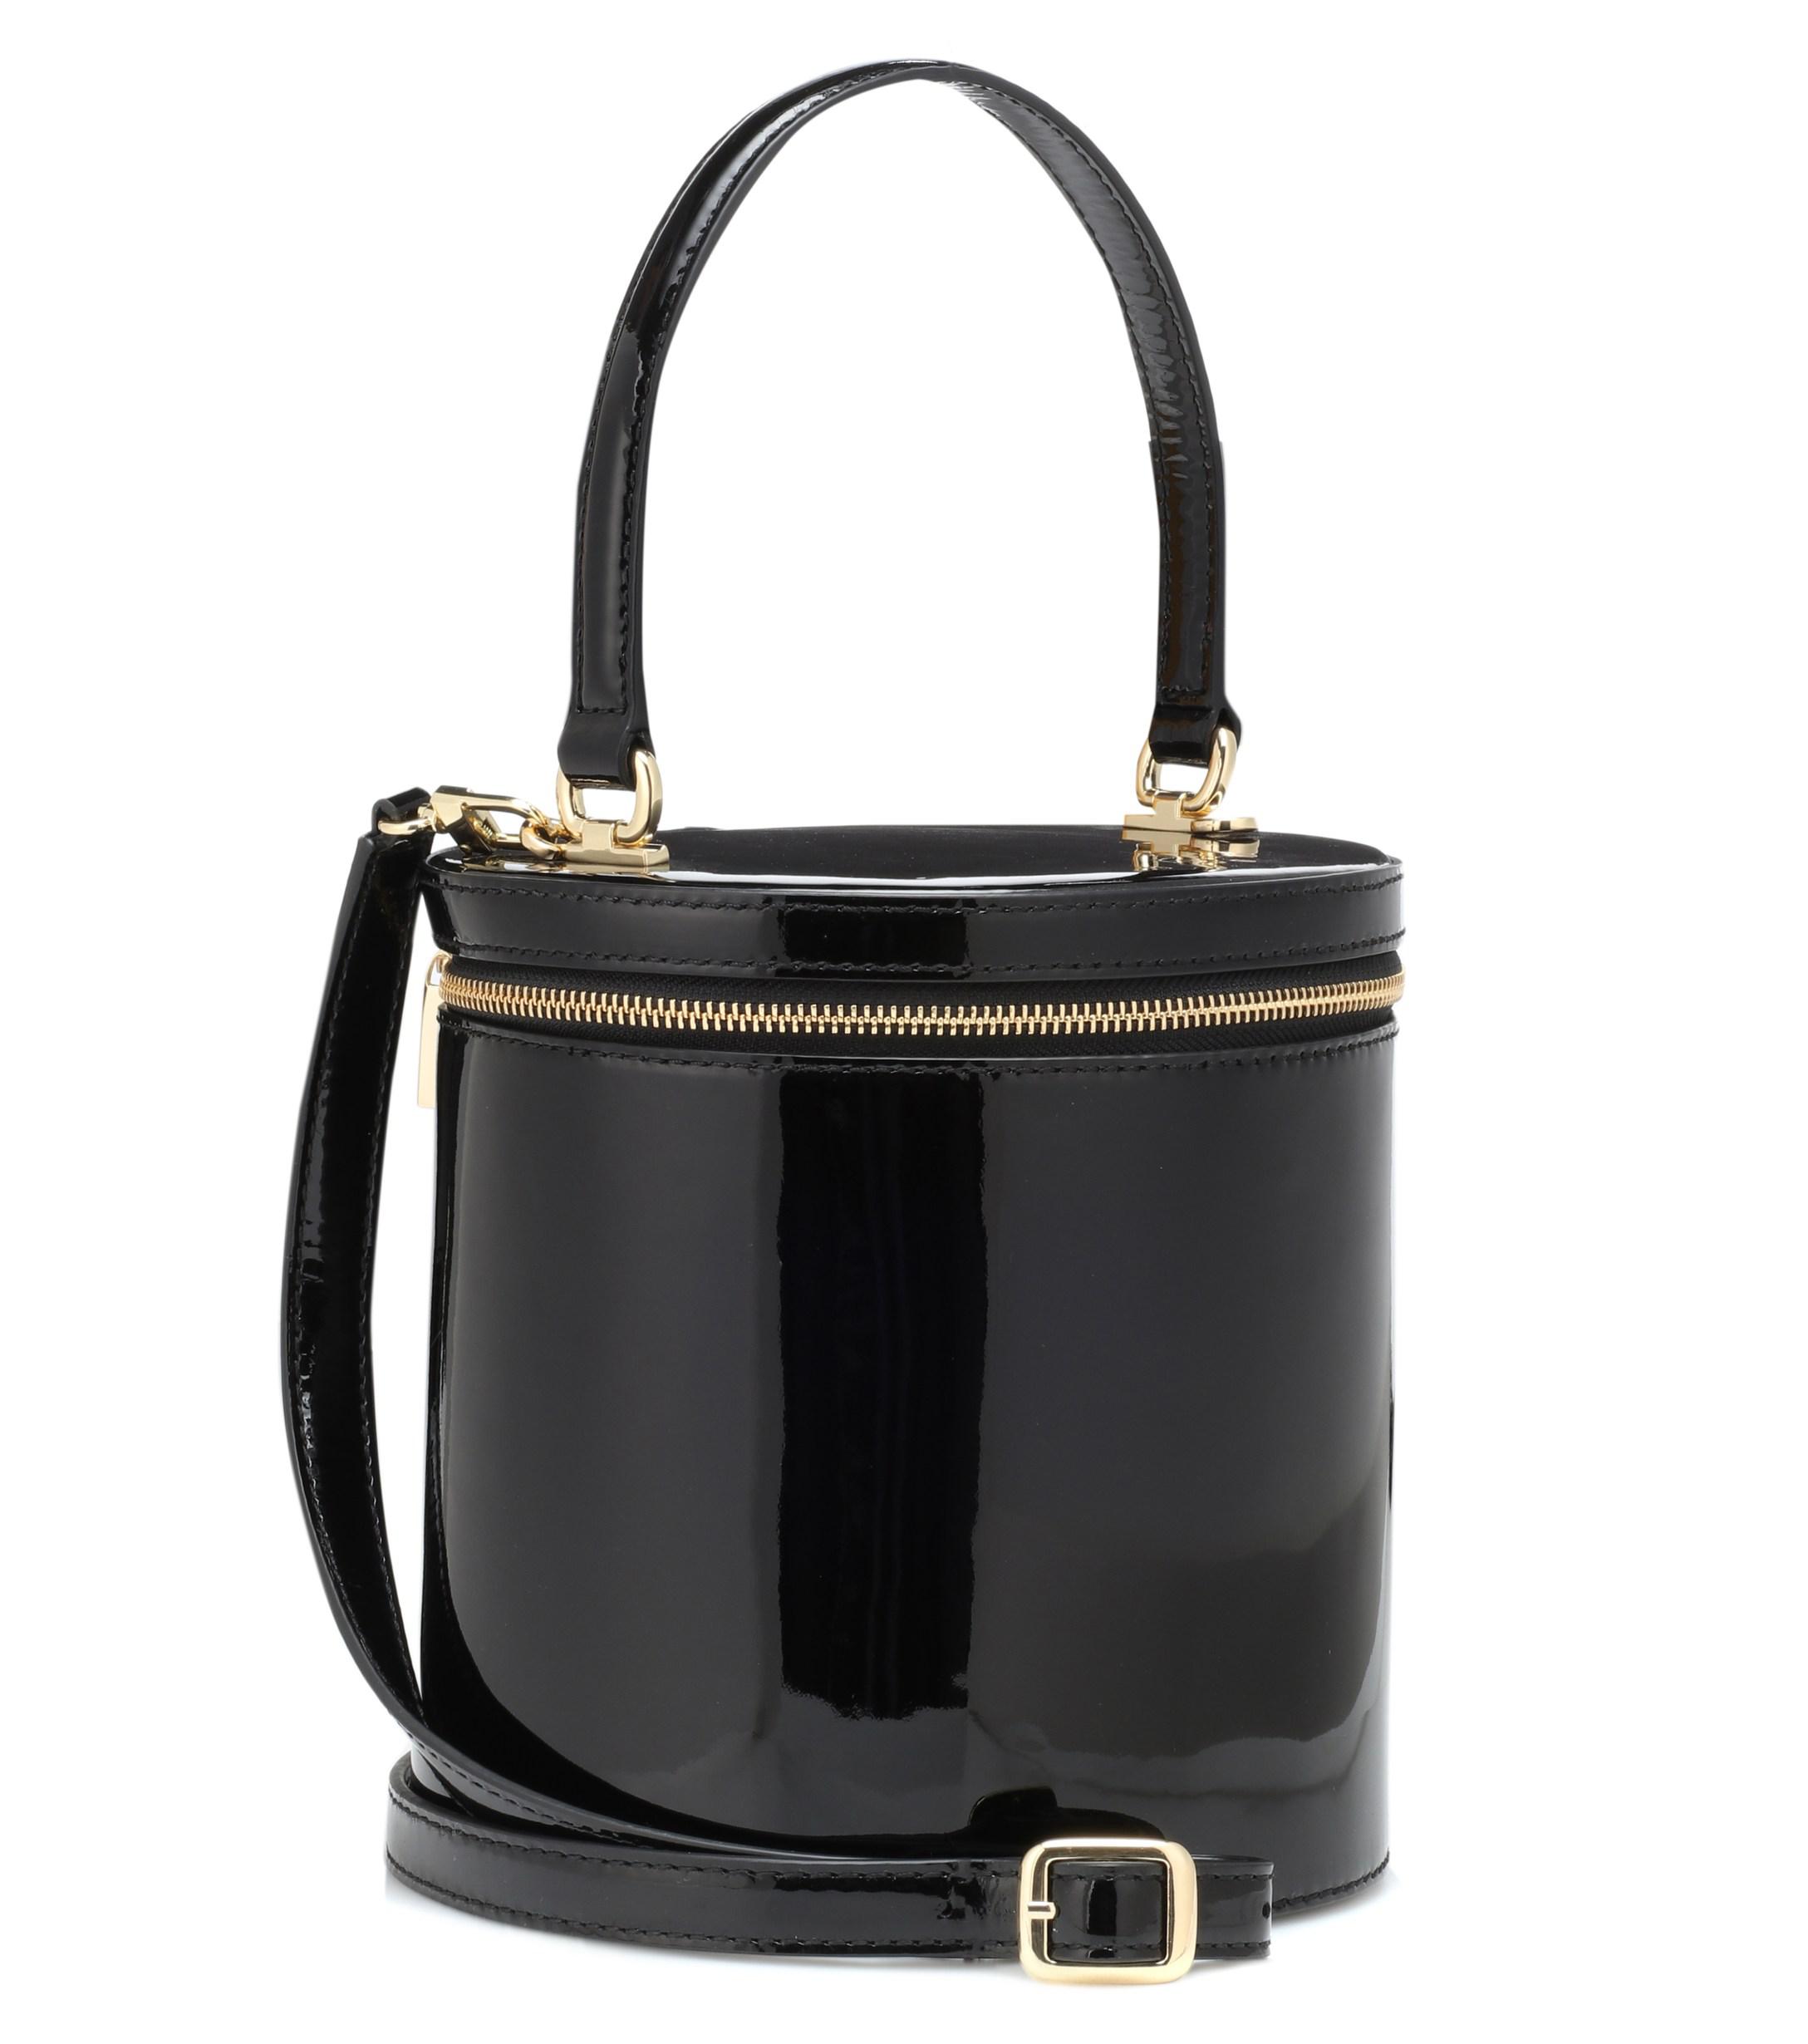 STAUD Vitti Patent Leather Bucket Bag in Black - Lyst